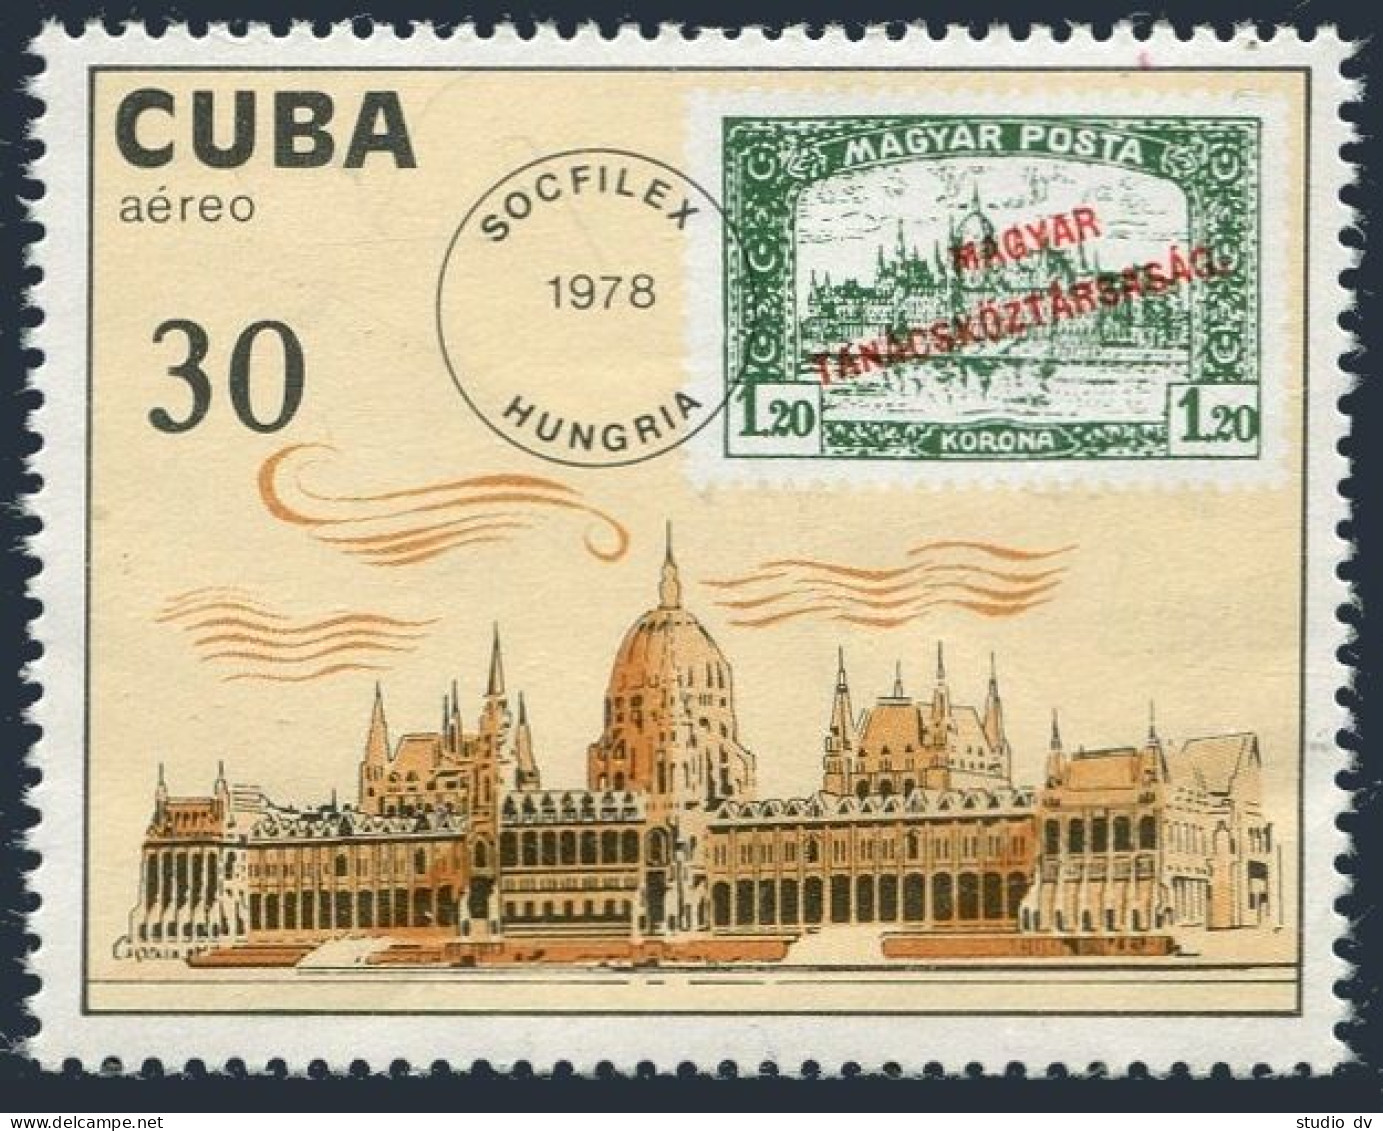 Cuba C280, MNH. Michel 2293. SOCFILEX-1978, Budapest. Hungarian Stamp. - Unused Stamps